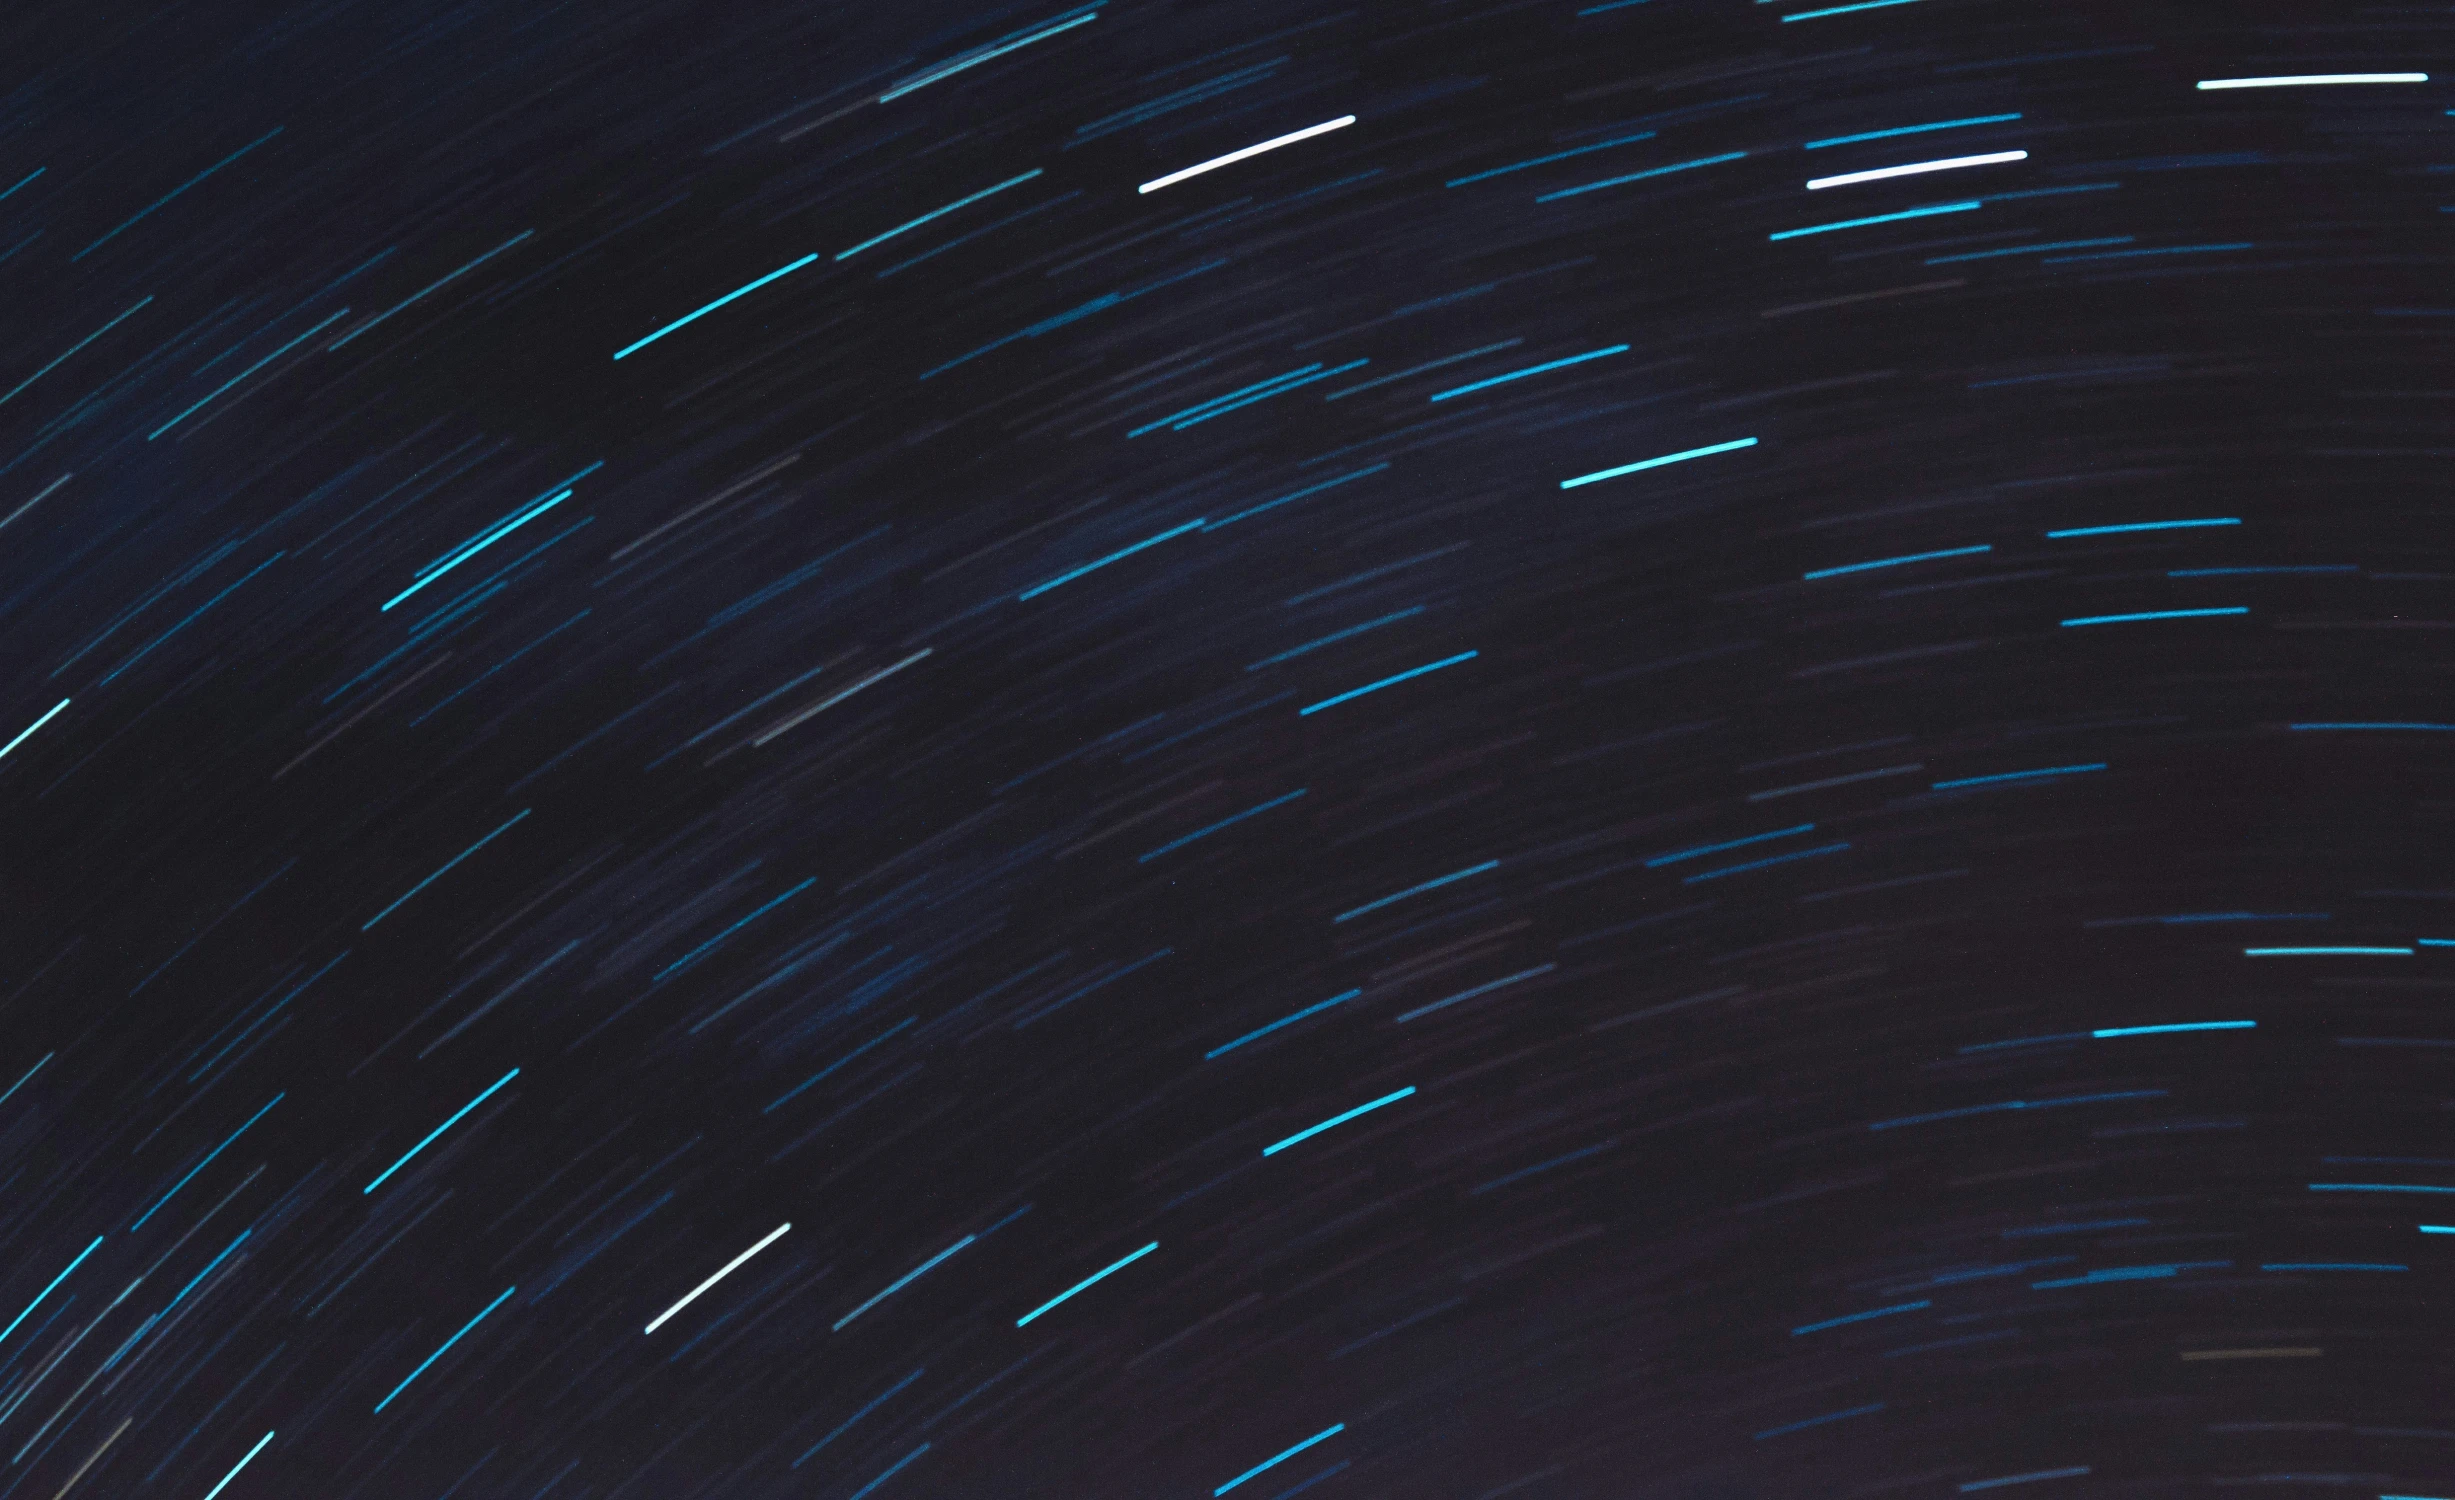 stars streak across the night sky in this image